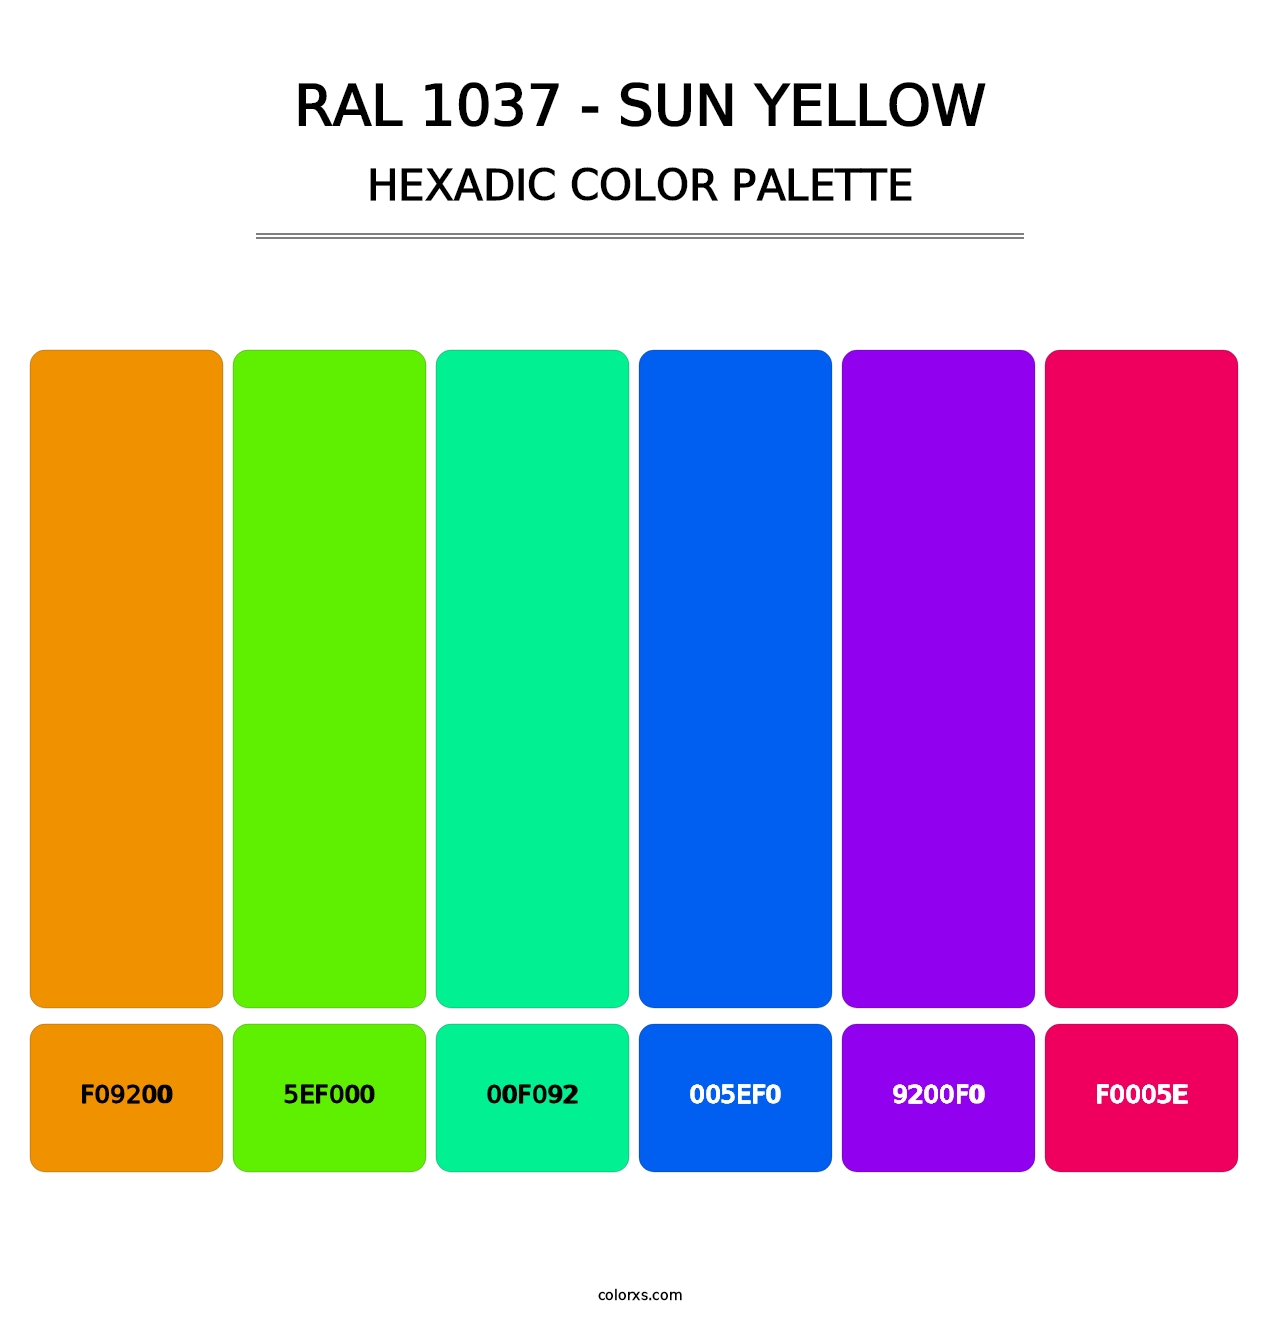 RAL 1037 - Sun Yellow - Hexadic Color Palette